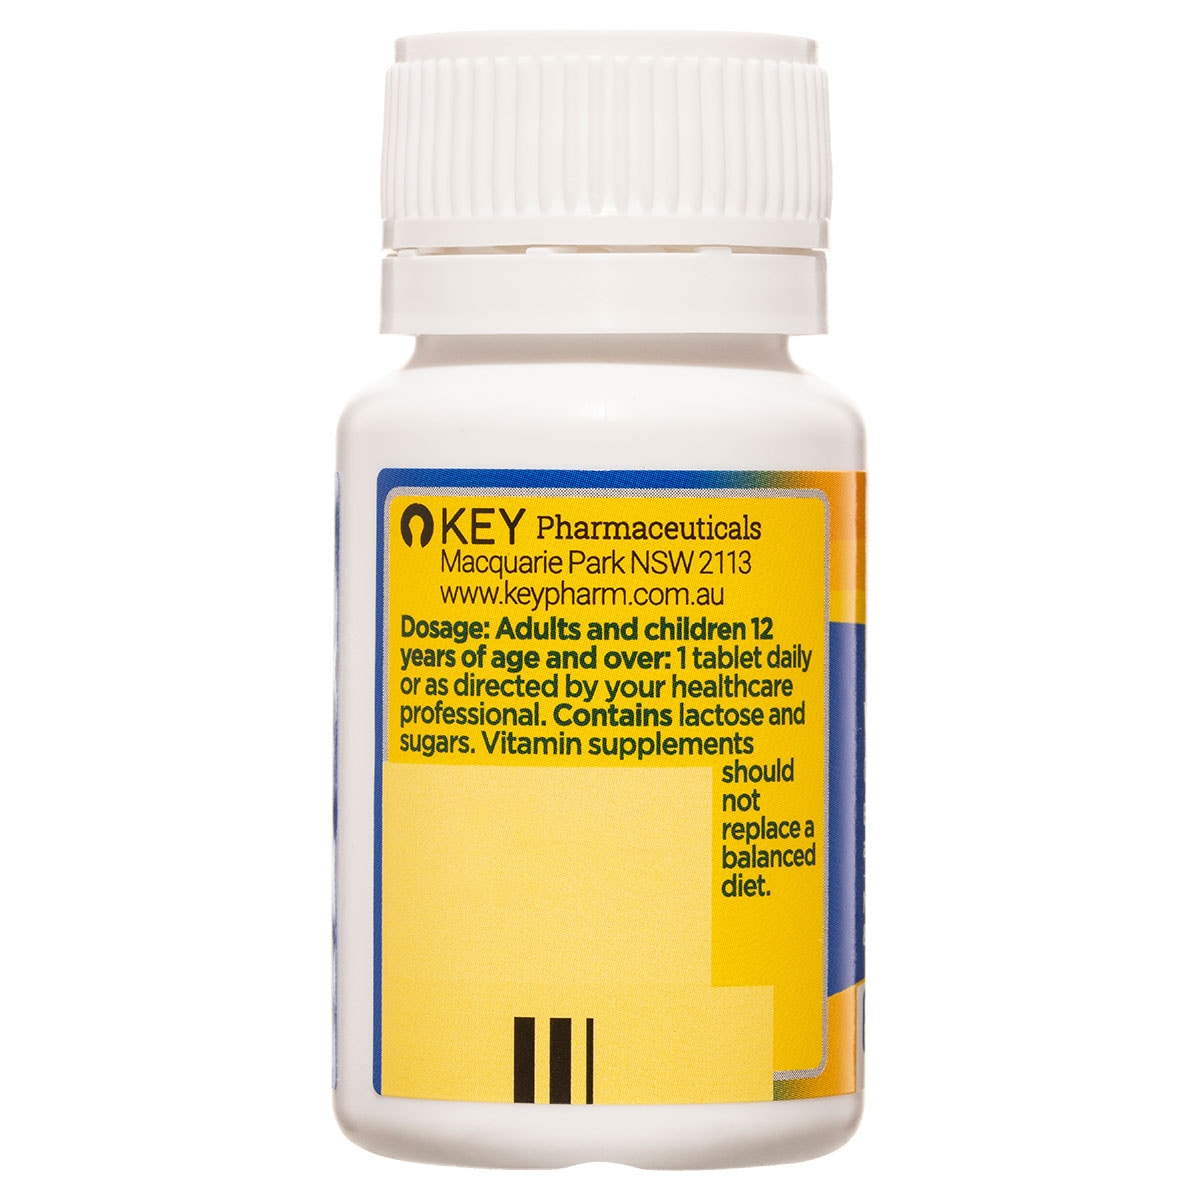 OsteVit-D One-a-Day Vitamin D3 1000iu 60 Tablets